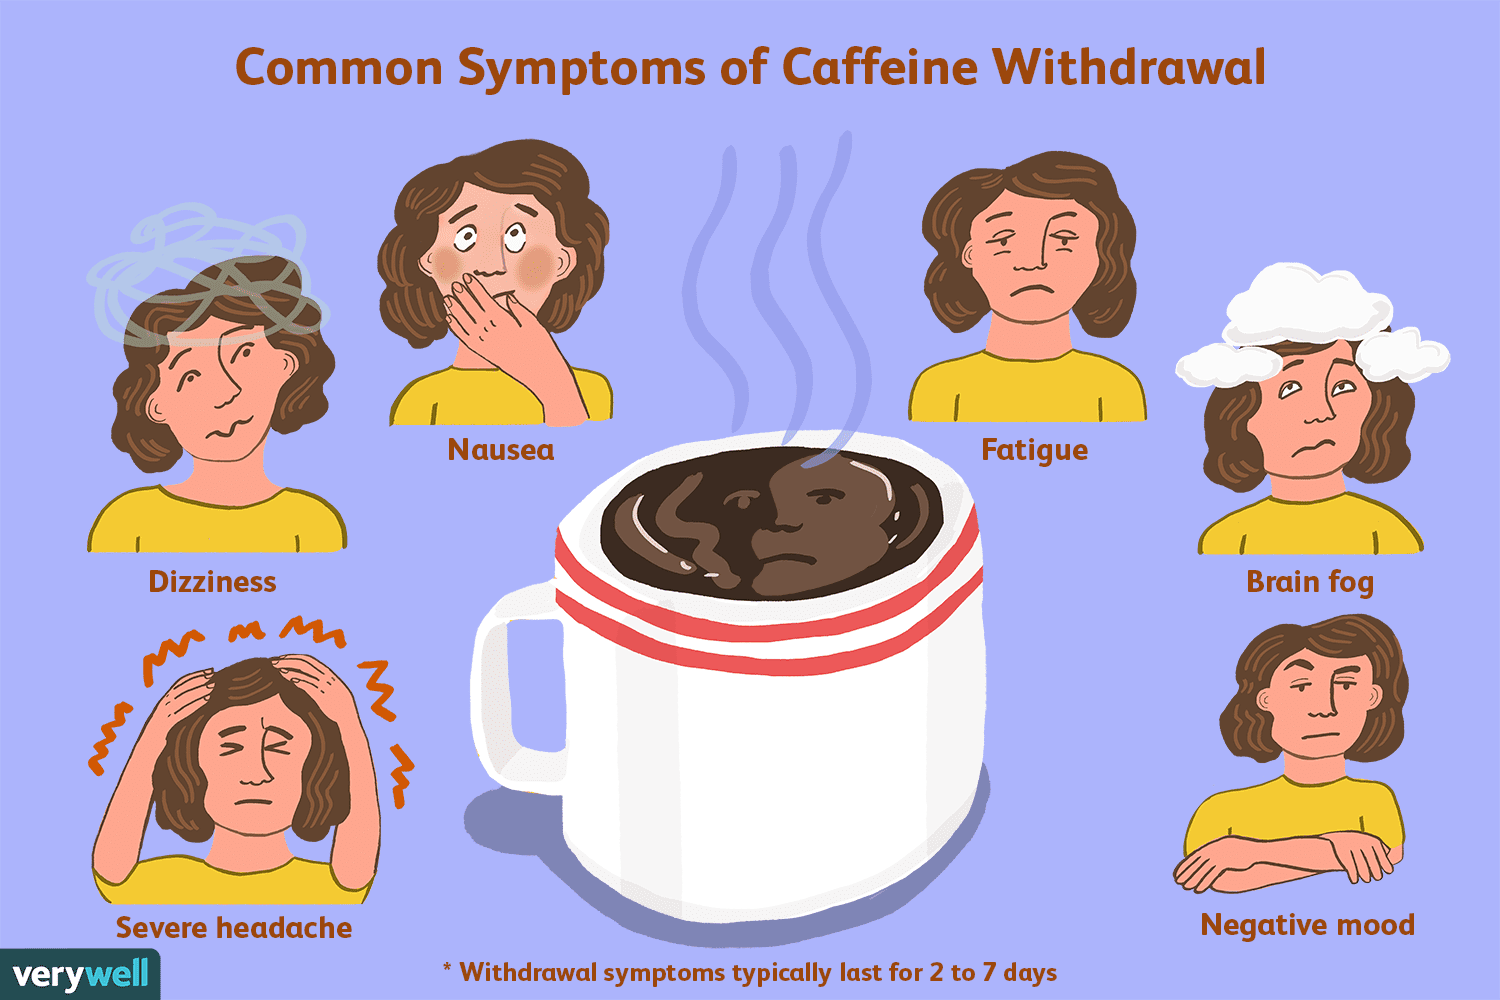 Can Caffeine Withdrawal Cause a Rash?